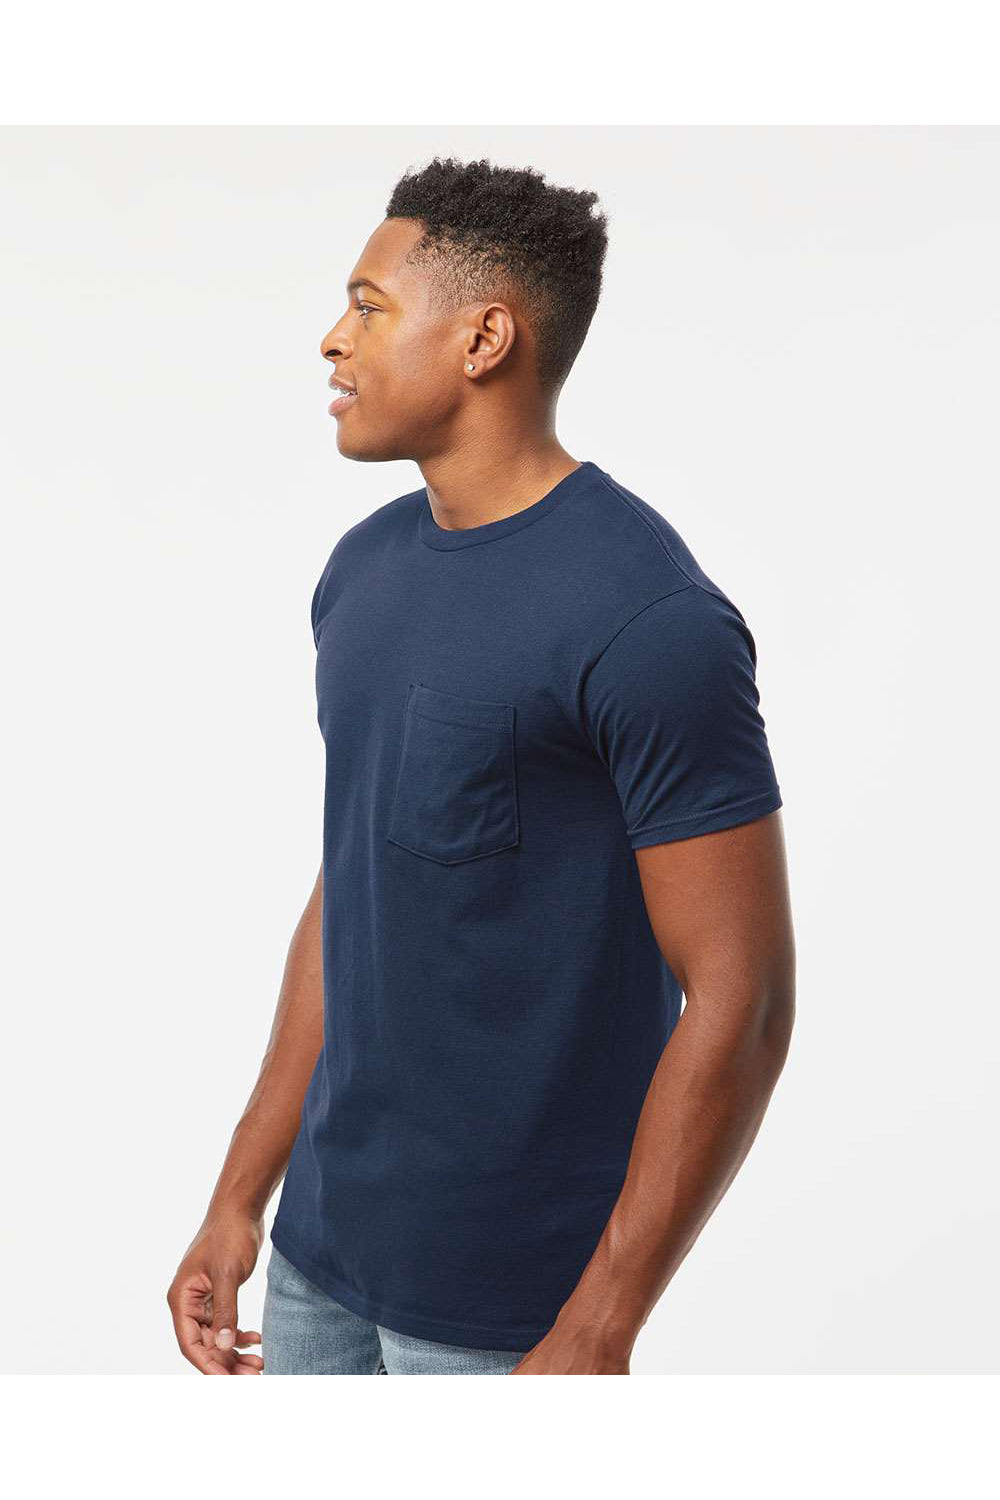 Tultex 293 Mens Jersey Short Sleeve Crewneck T-Shirt w/ Pocket Navy Blue Model Side